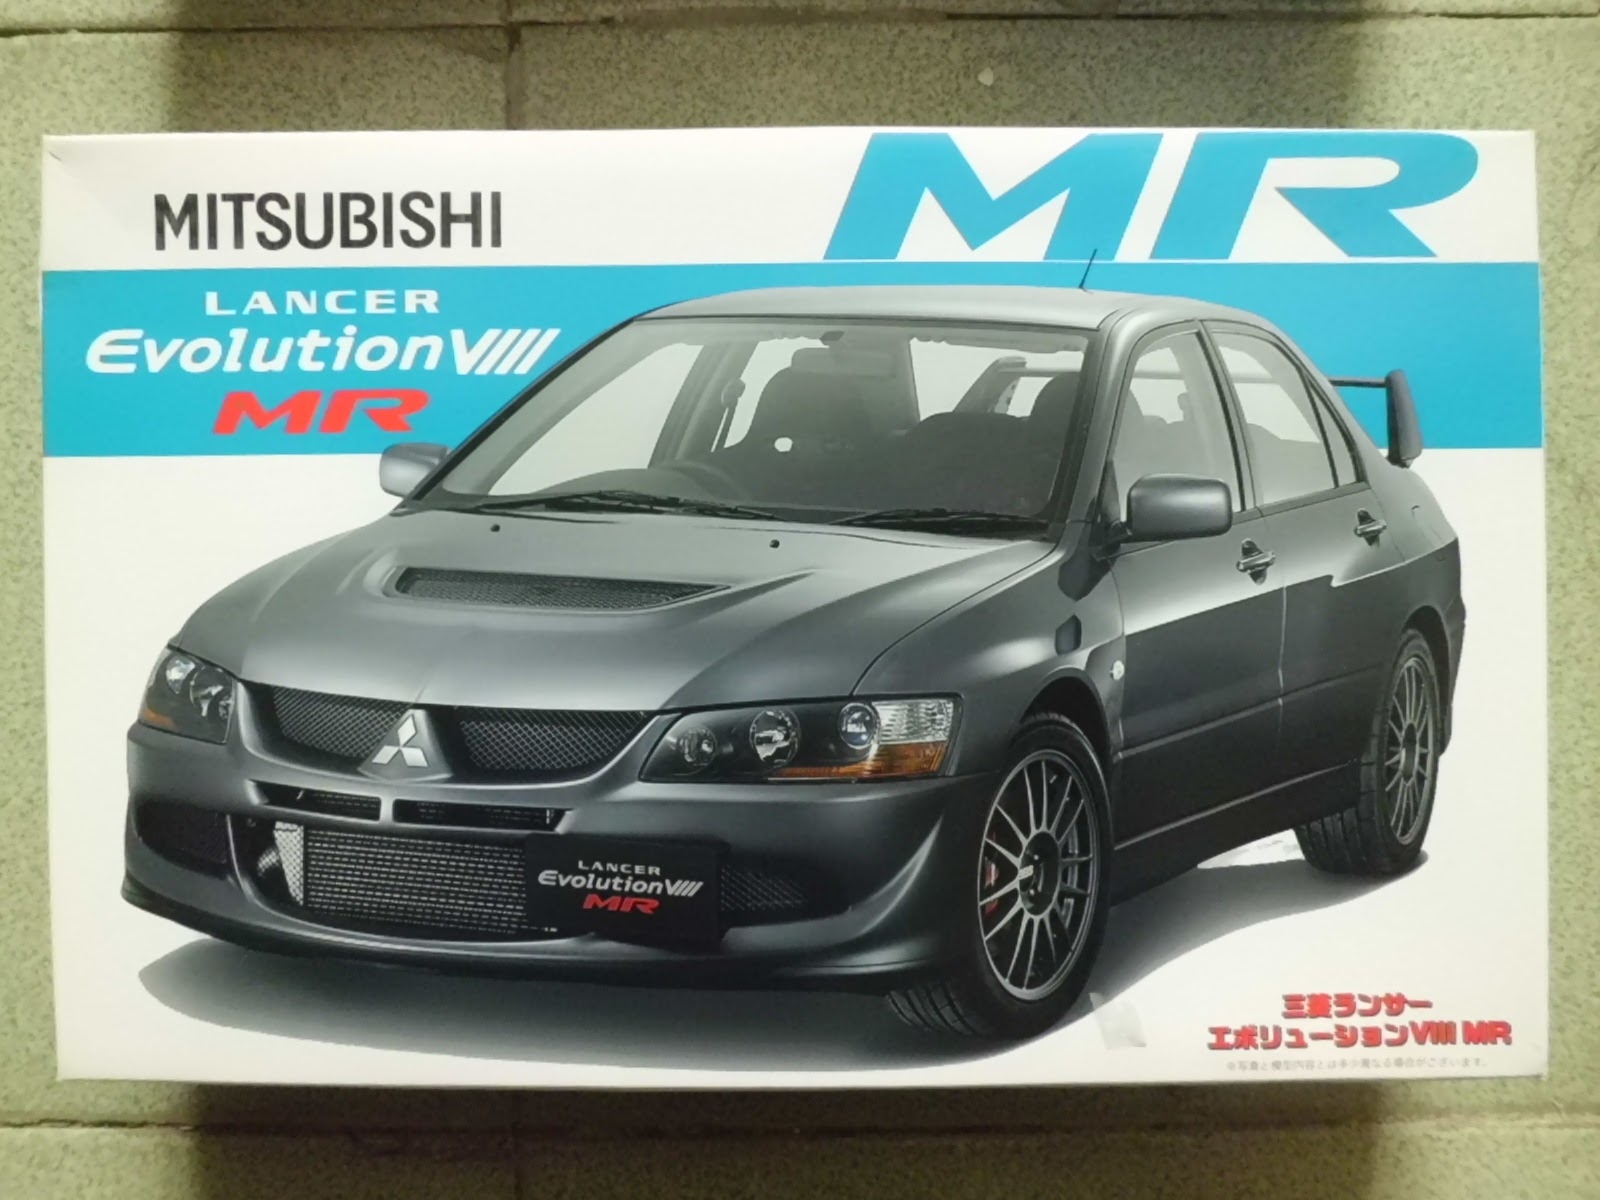 Mitsubishi 24. Fujimi Lancer Evolution Mr. Рекламная брошюра Lancer Evolution. Mitsubishi Motor Sport Lancer Evolution VIII Ralliart. Флейм на Mitsubishi Lancer Evolution VIII развертка.